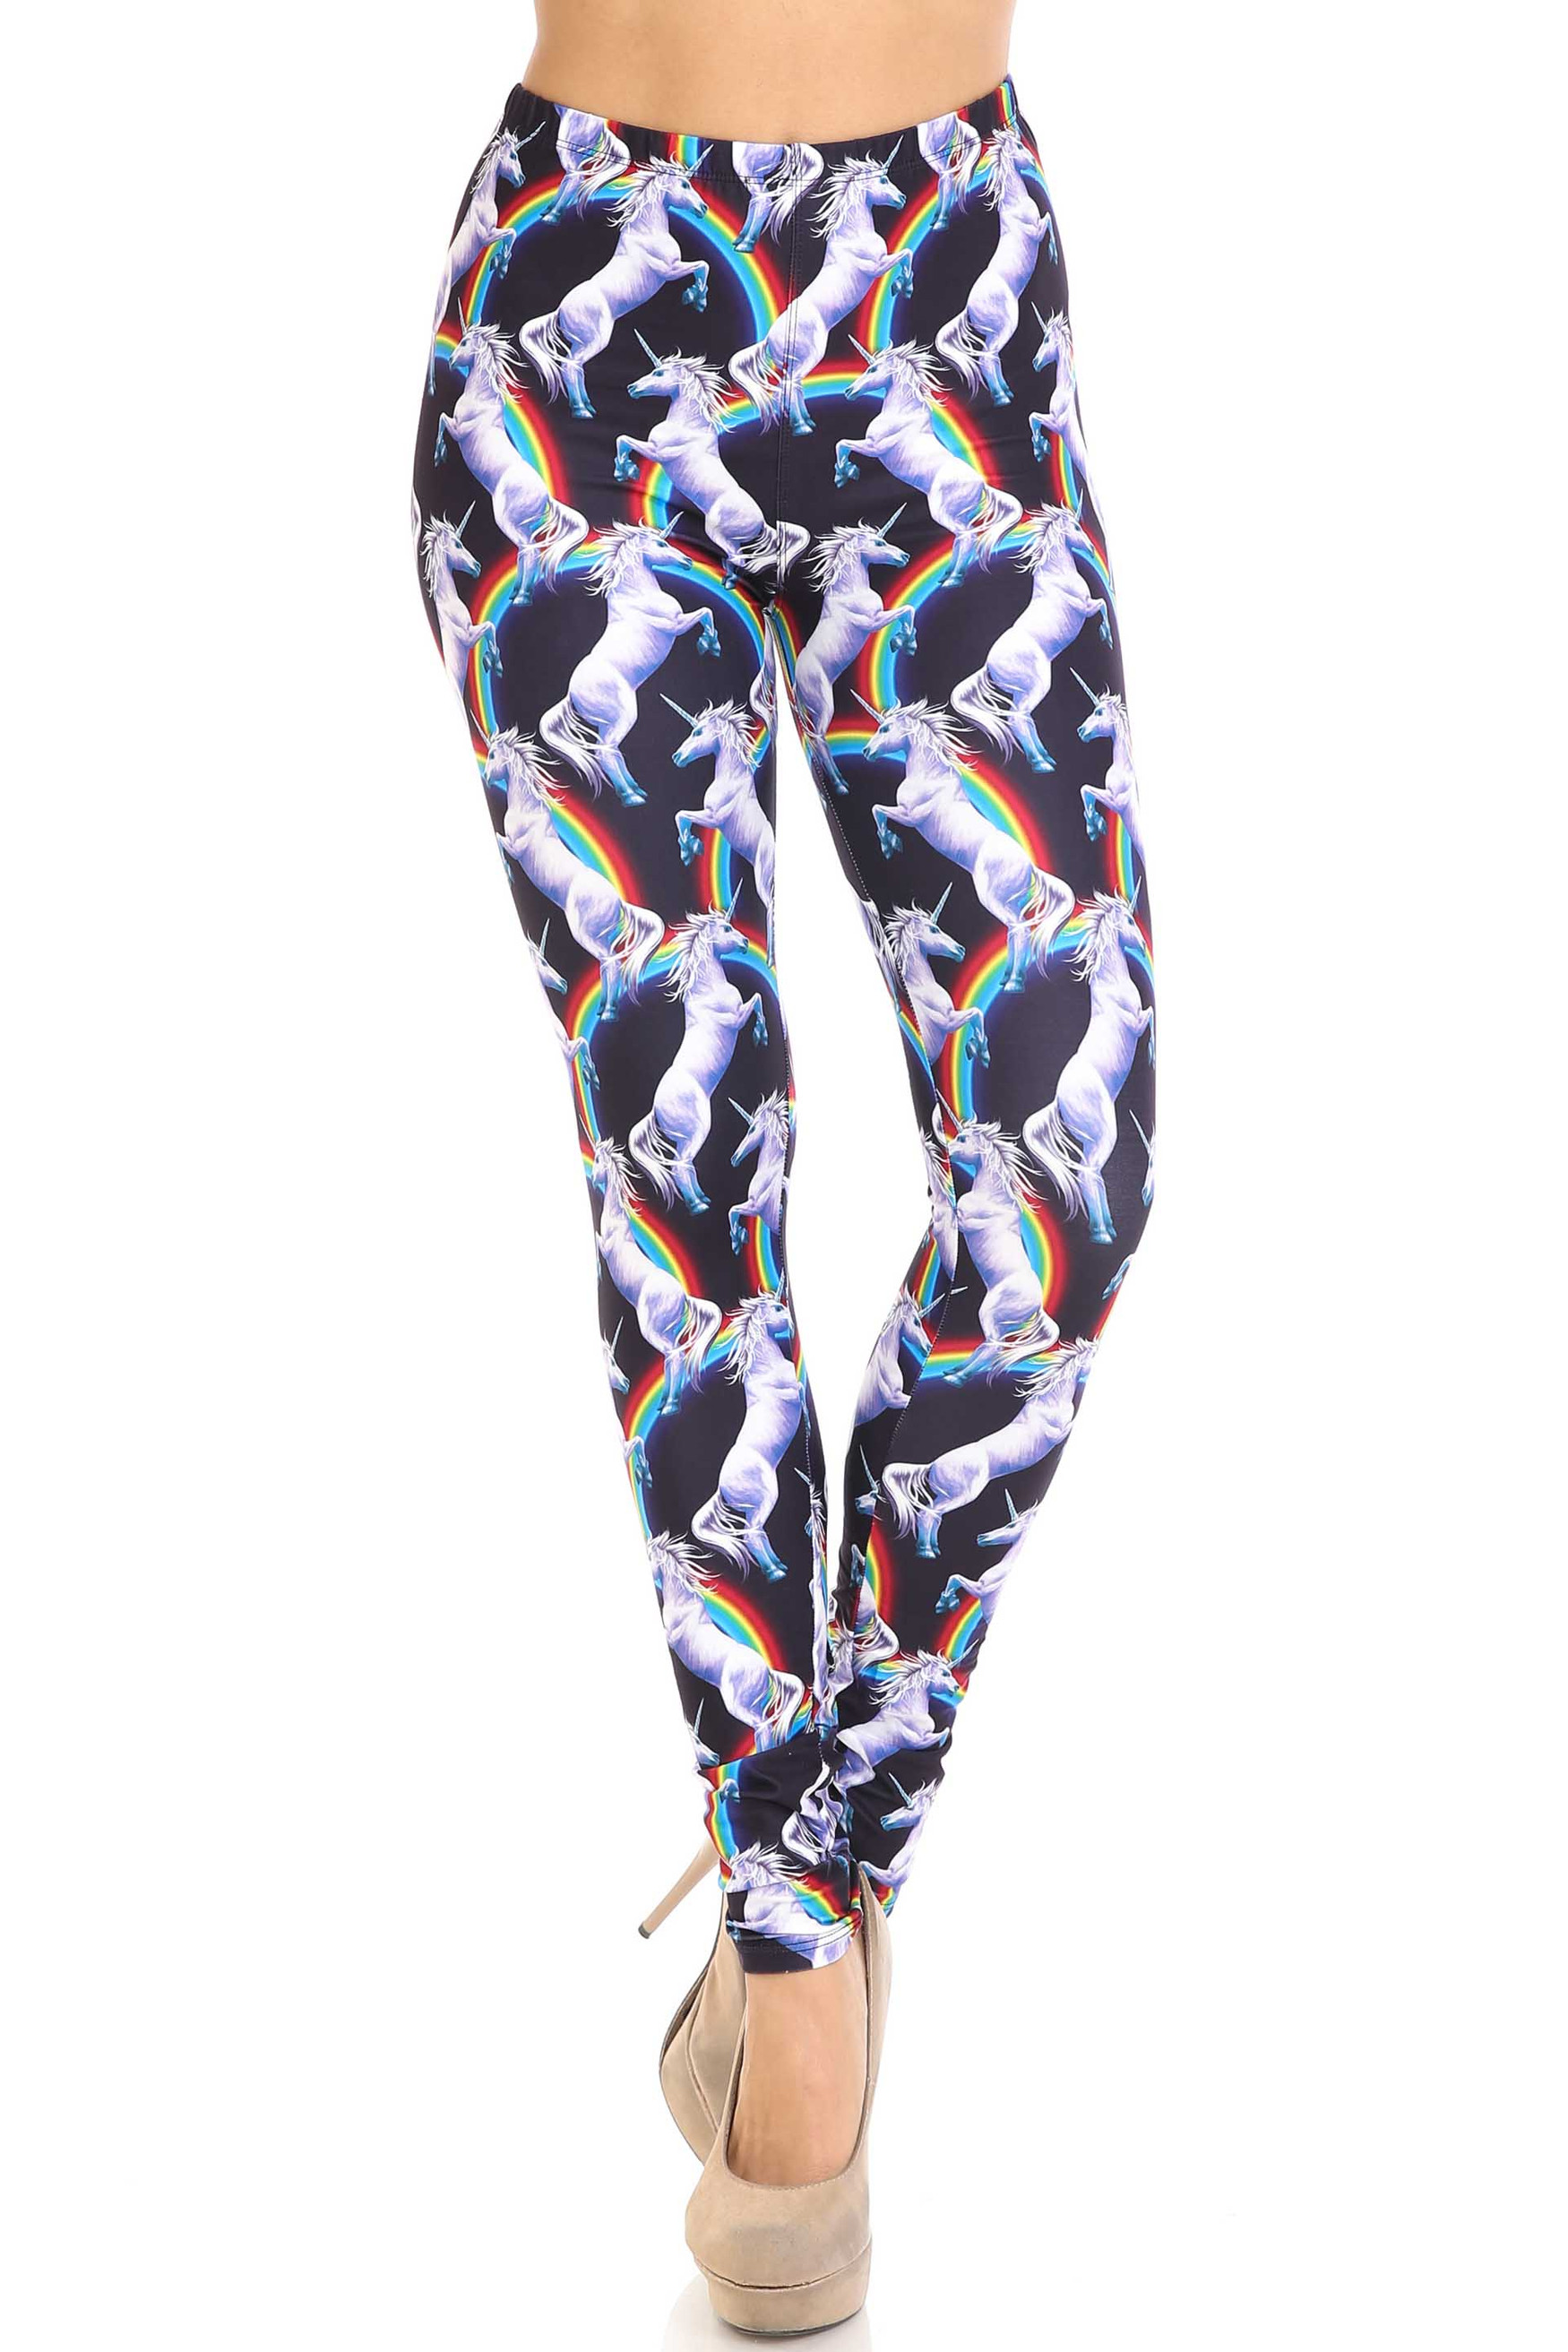 Creamy Soft Rainbow Unicorn Extra Plus Size Leggings - By USA Fashion™